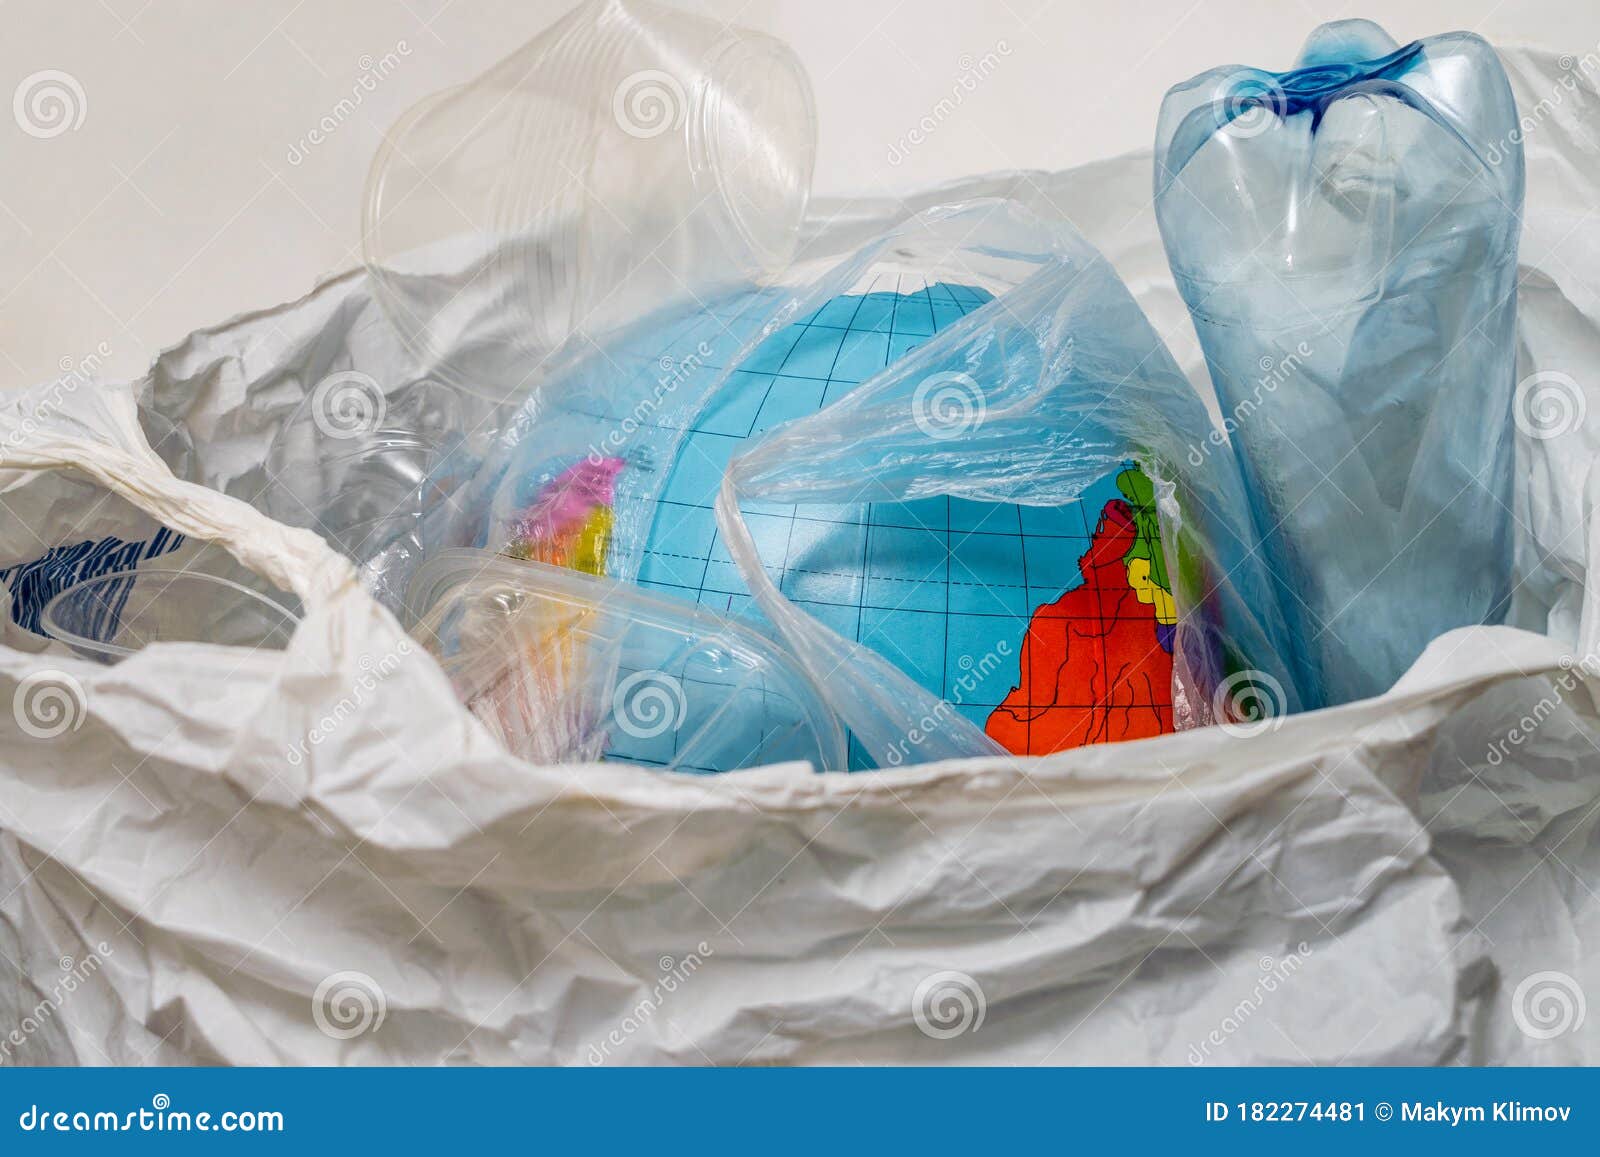 Trash Plastic Model